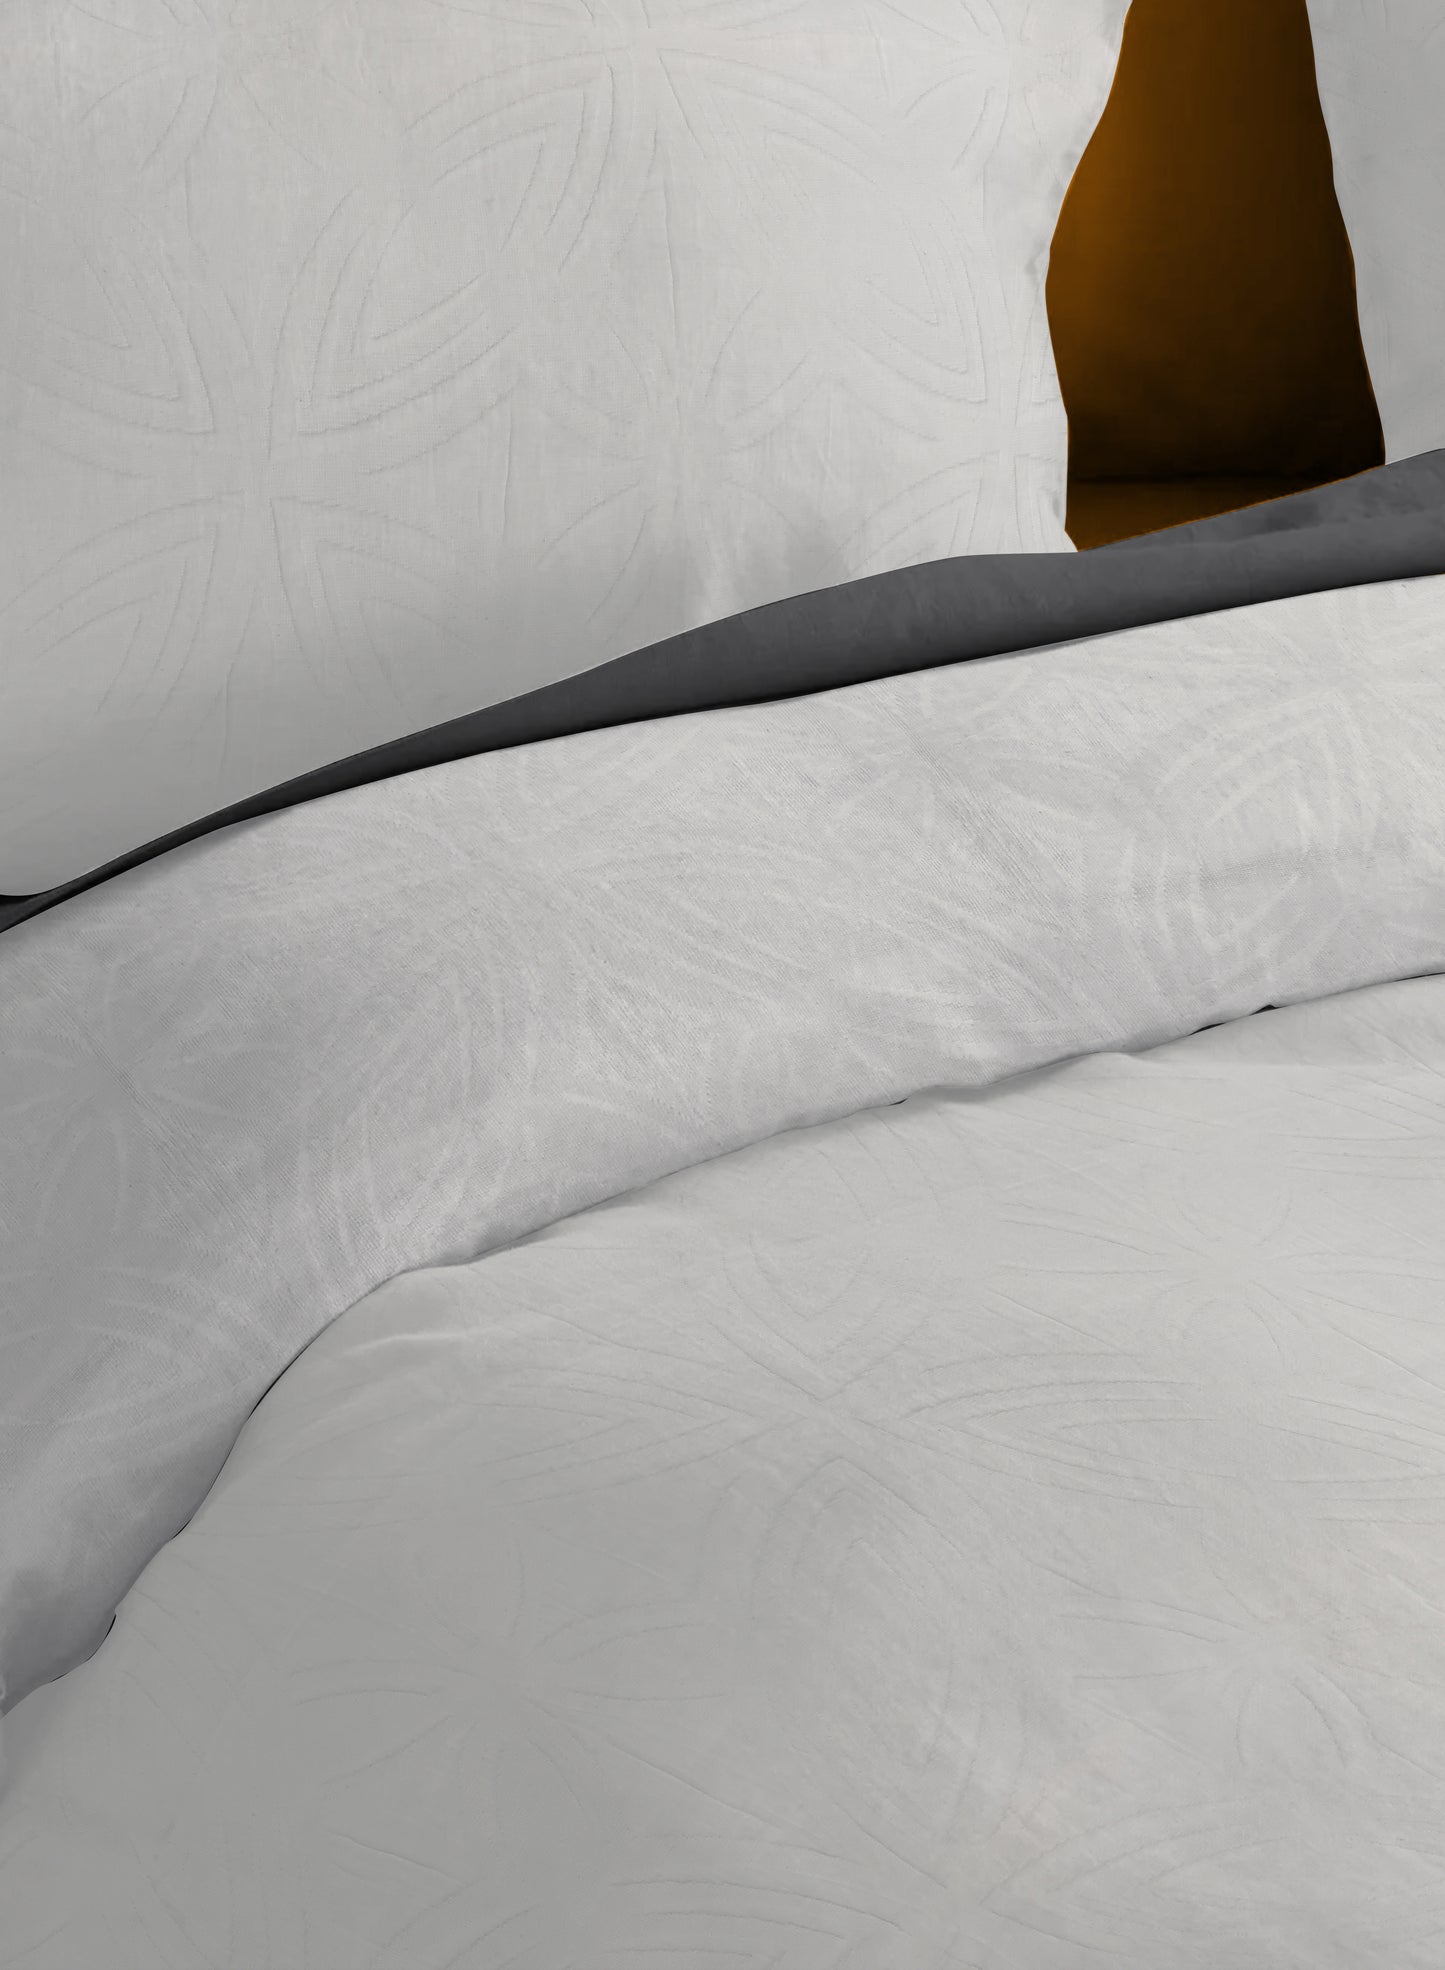 Weaverly Bedspread Set | White